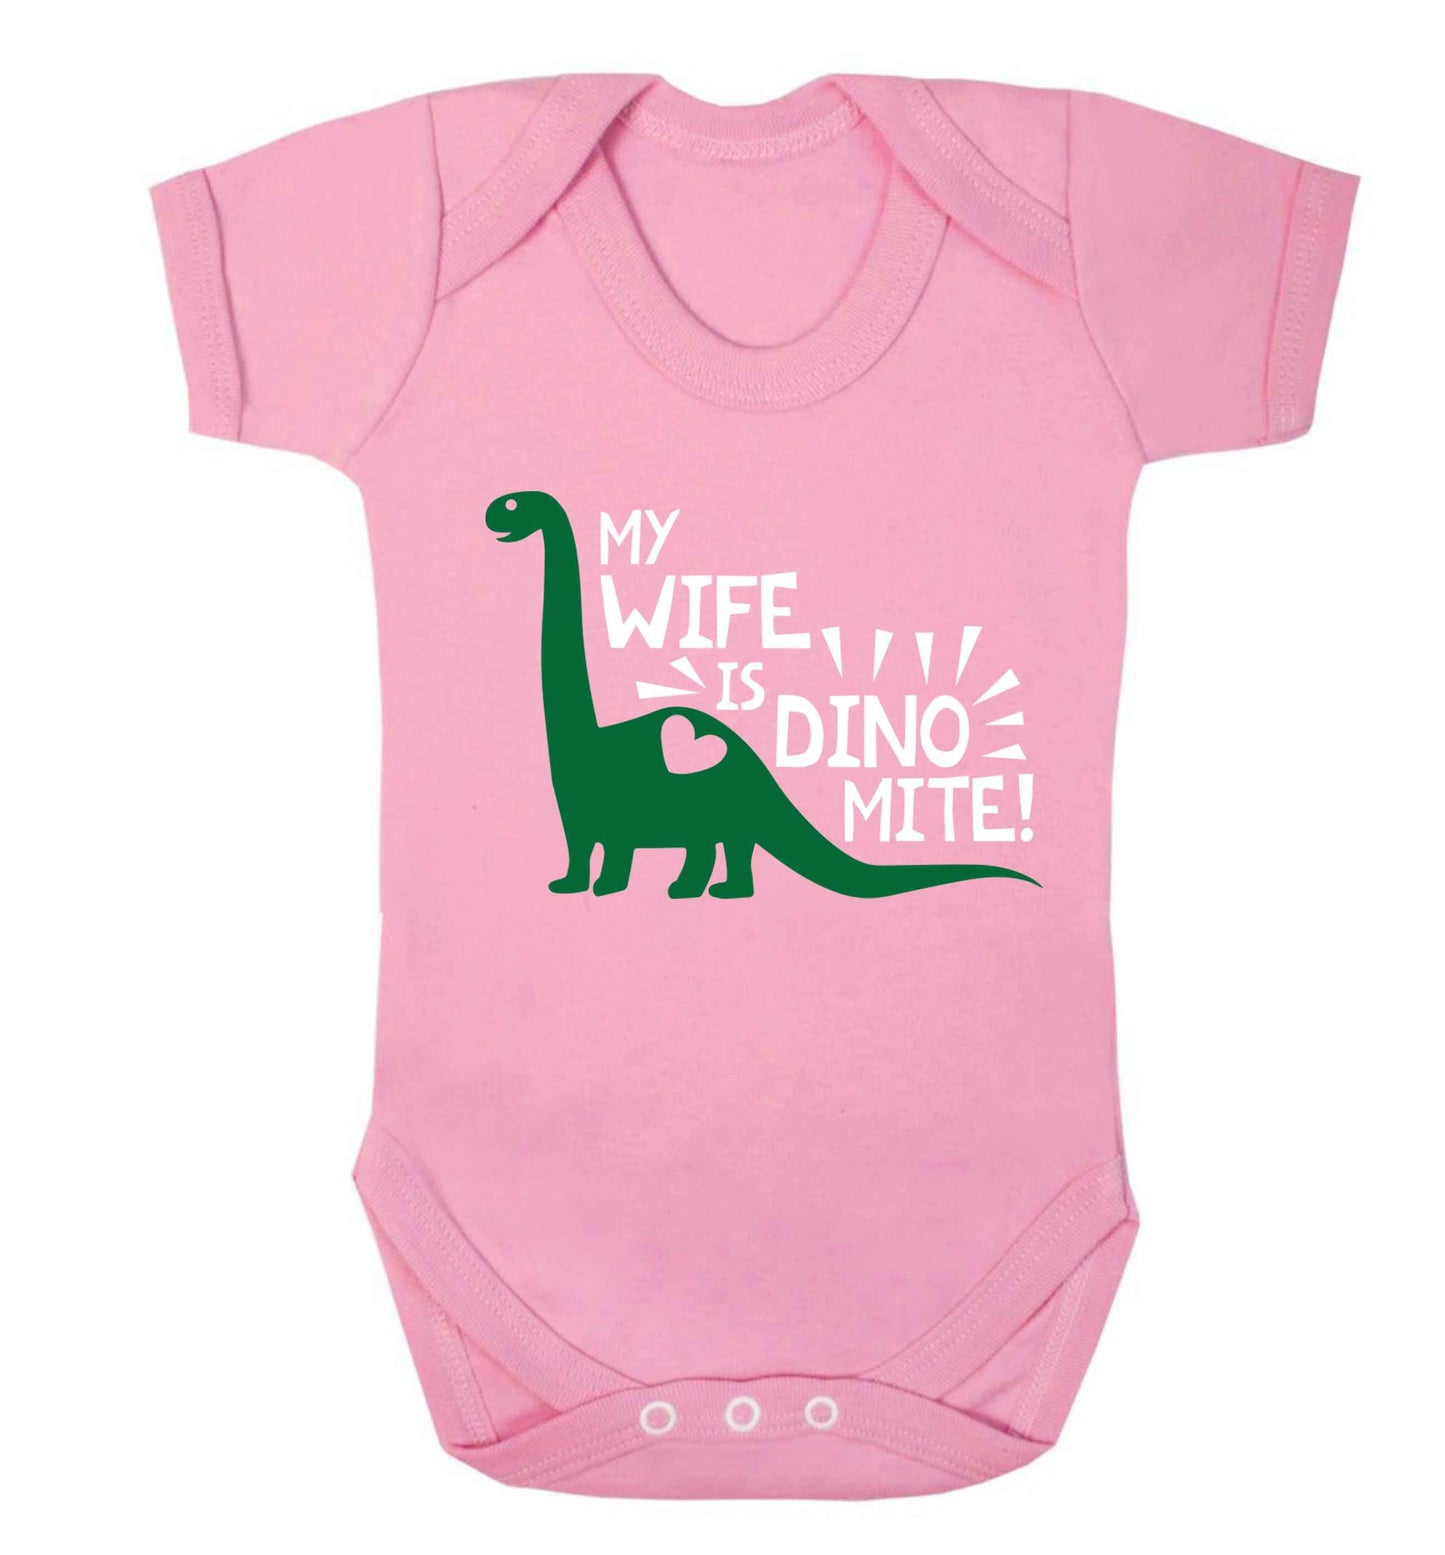 My wife is dinomite! Baby Vest pale pink 18-24 months